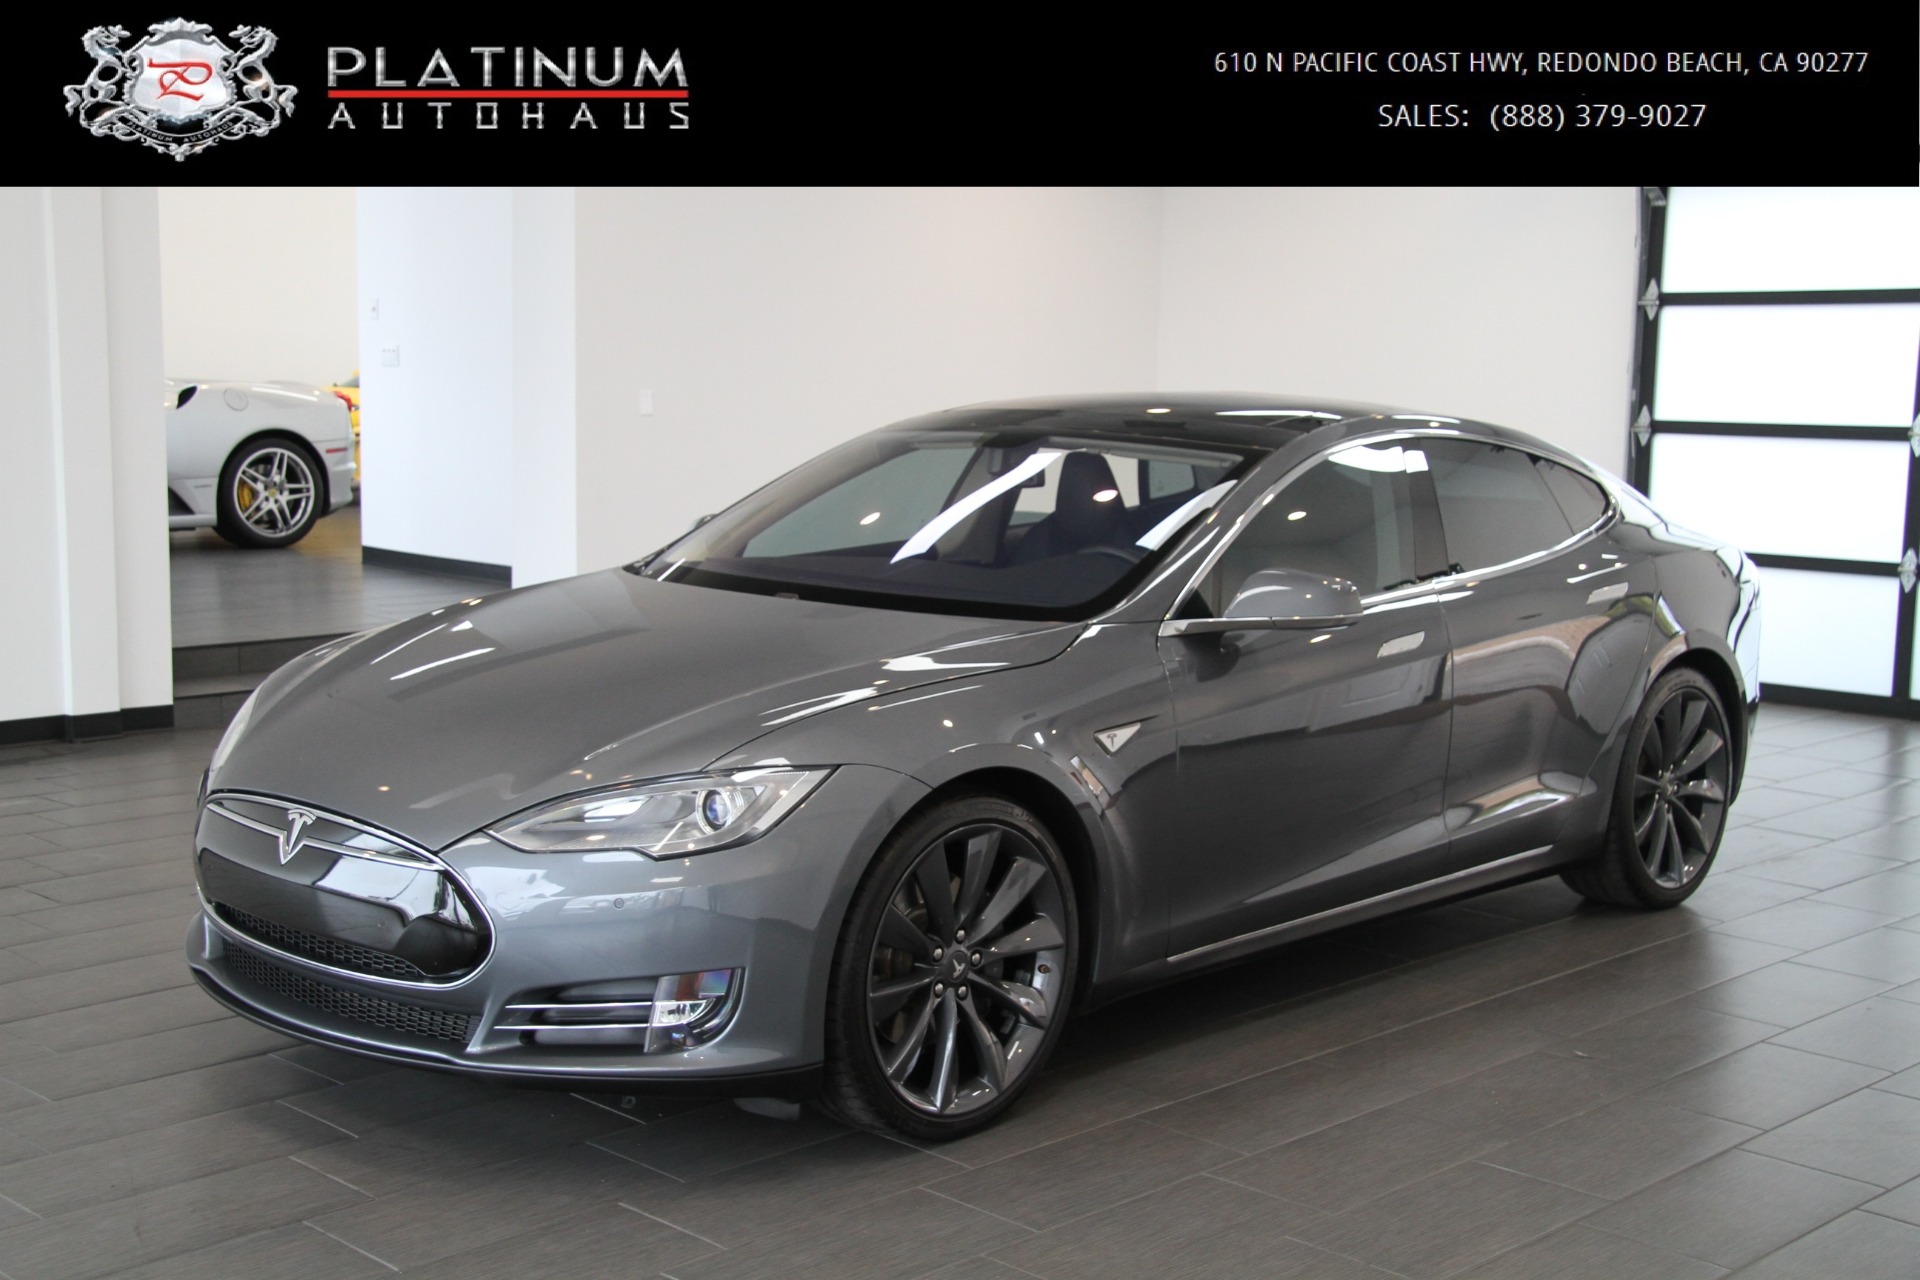 2013 Tesla Model S P85 Stock 6095 For Sale Near Redondo